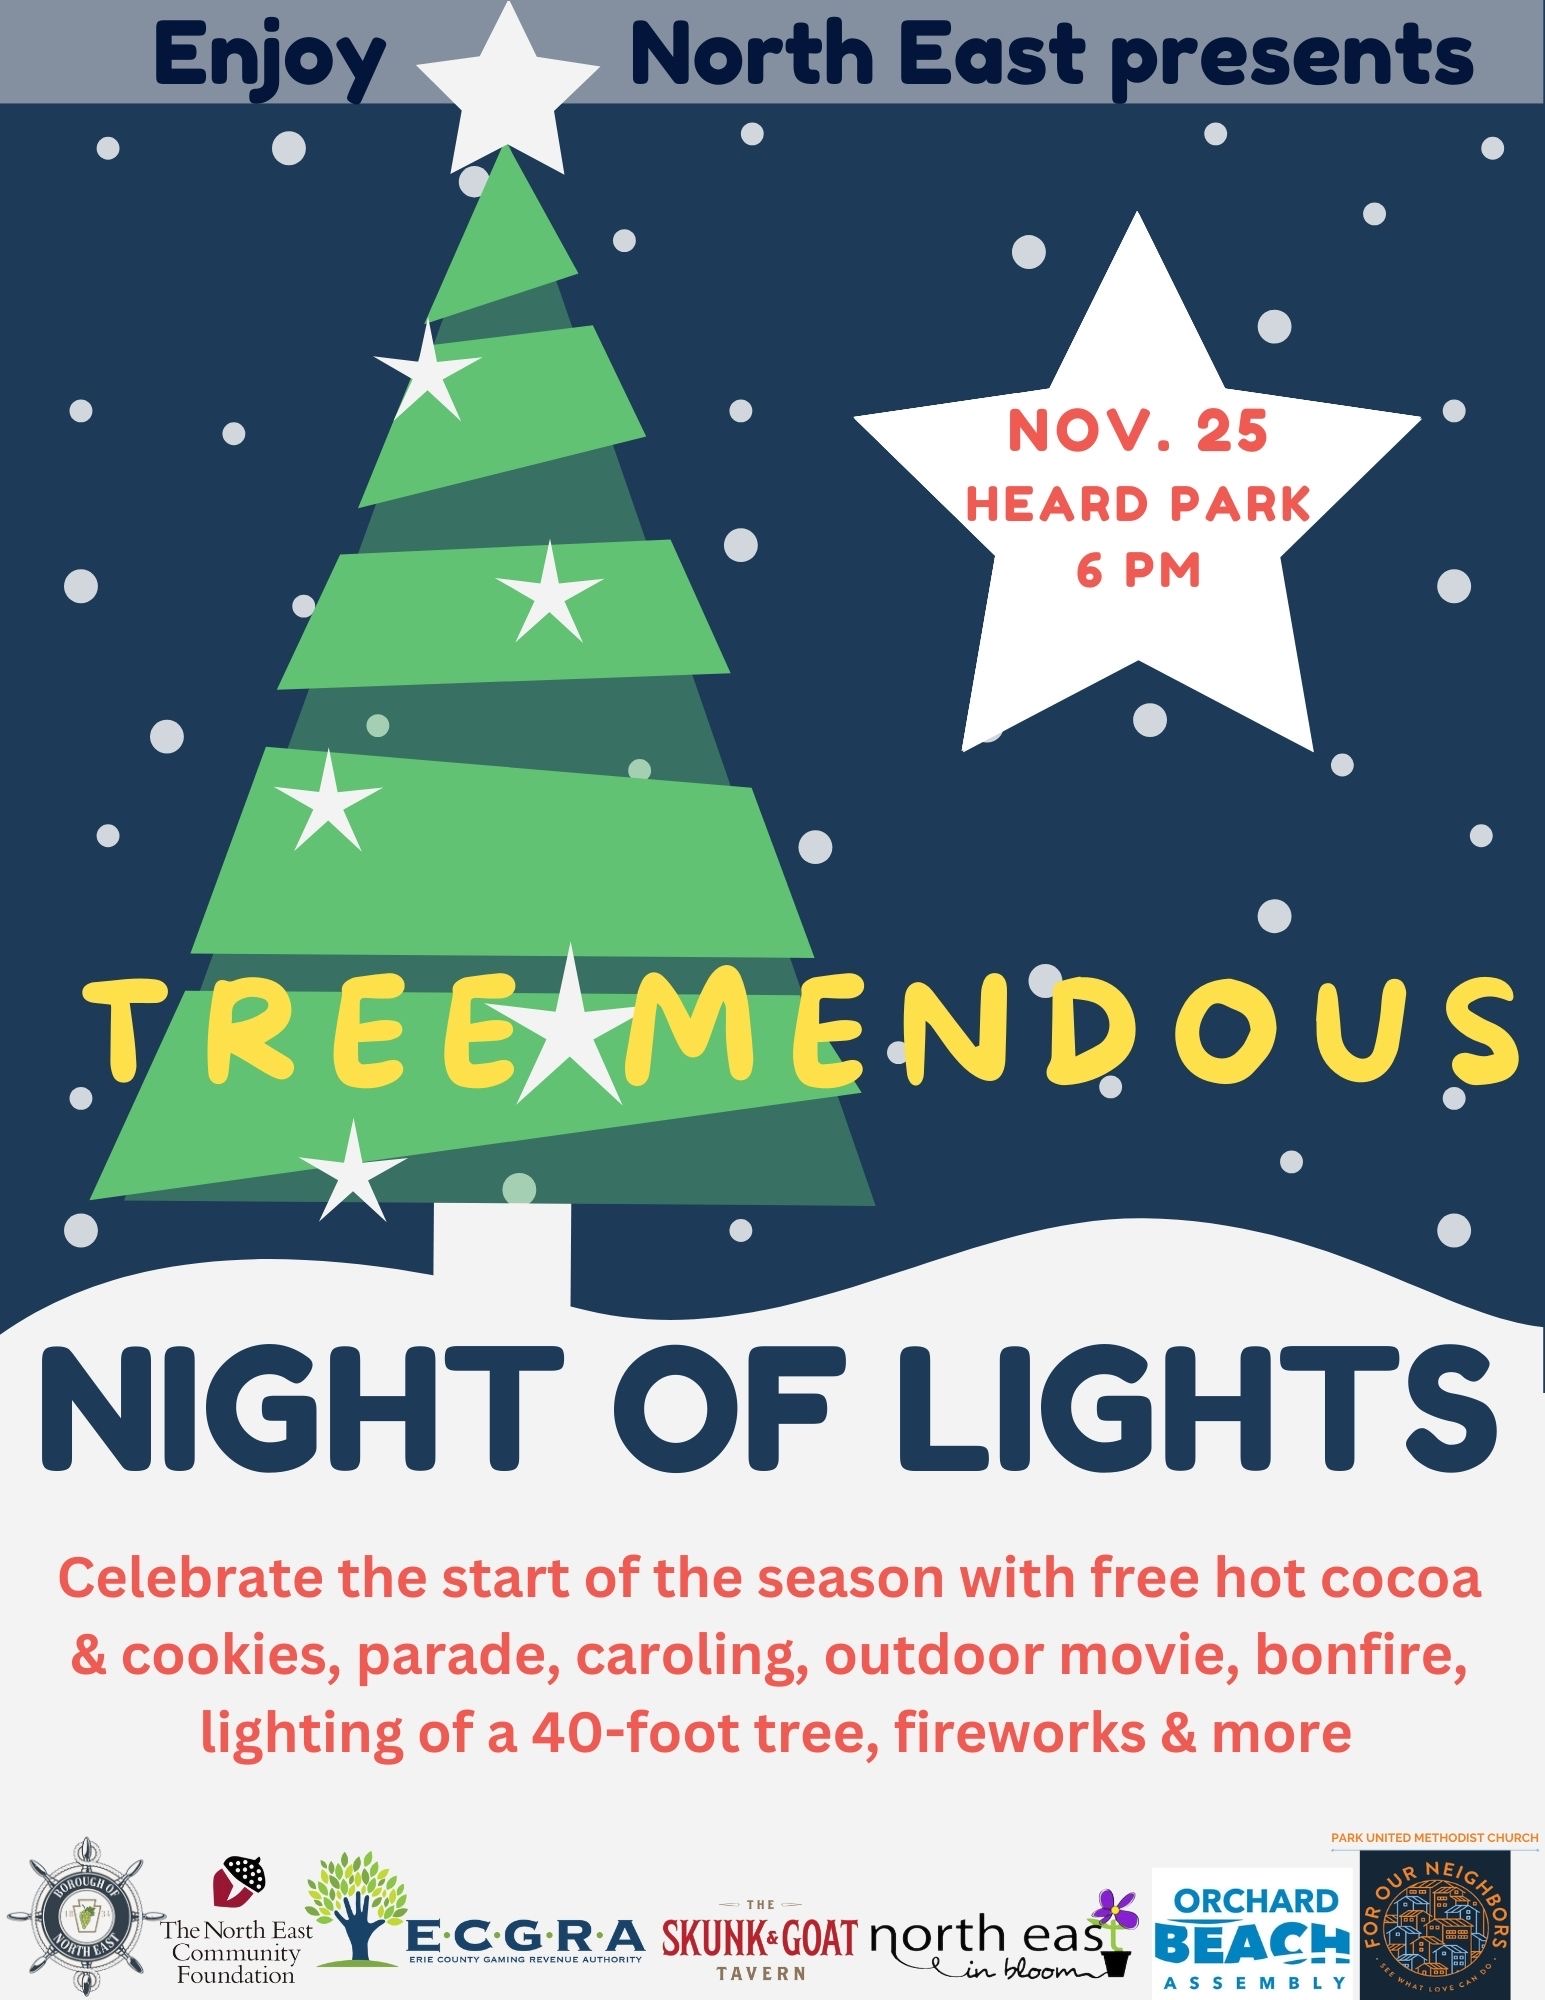 Tree-mendous Night of Lights